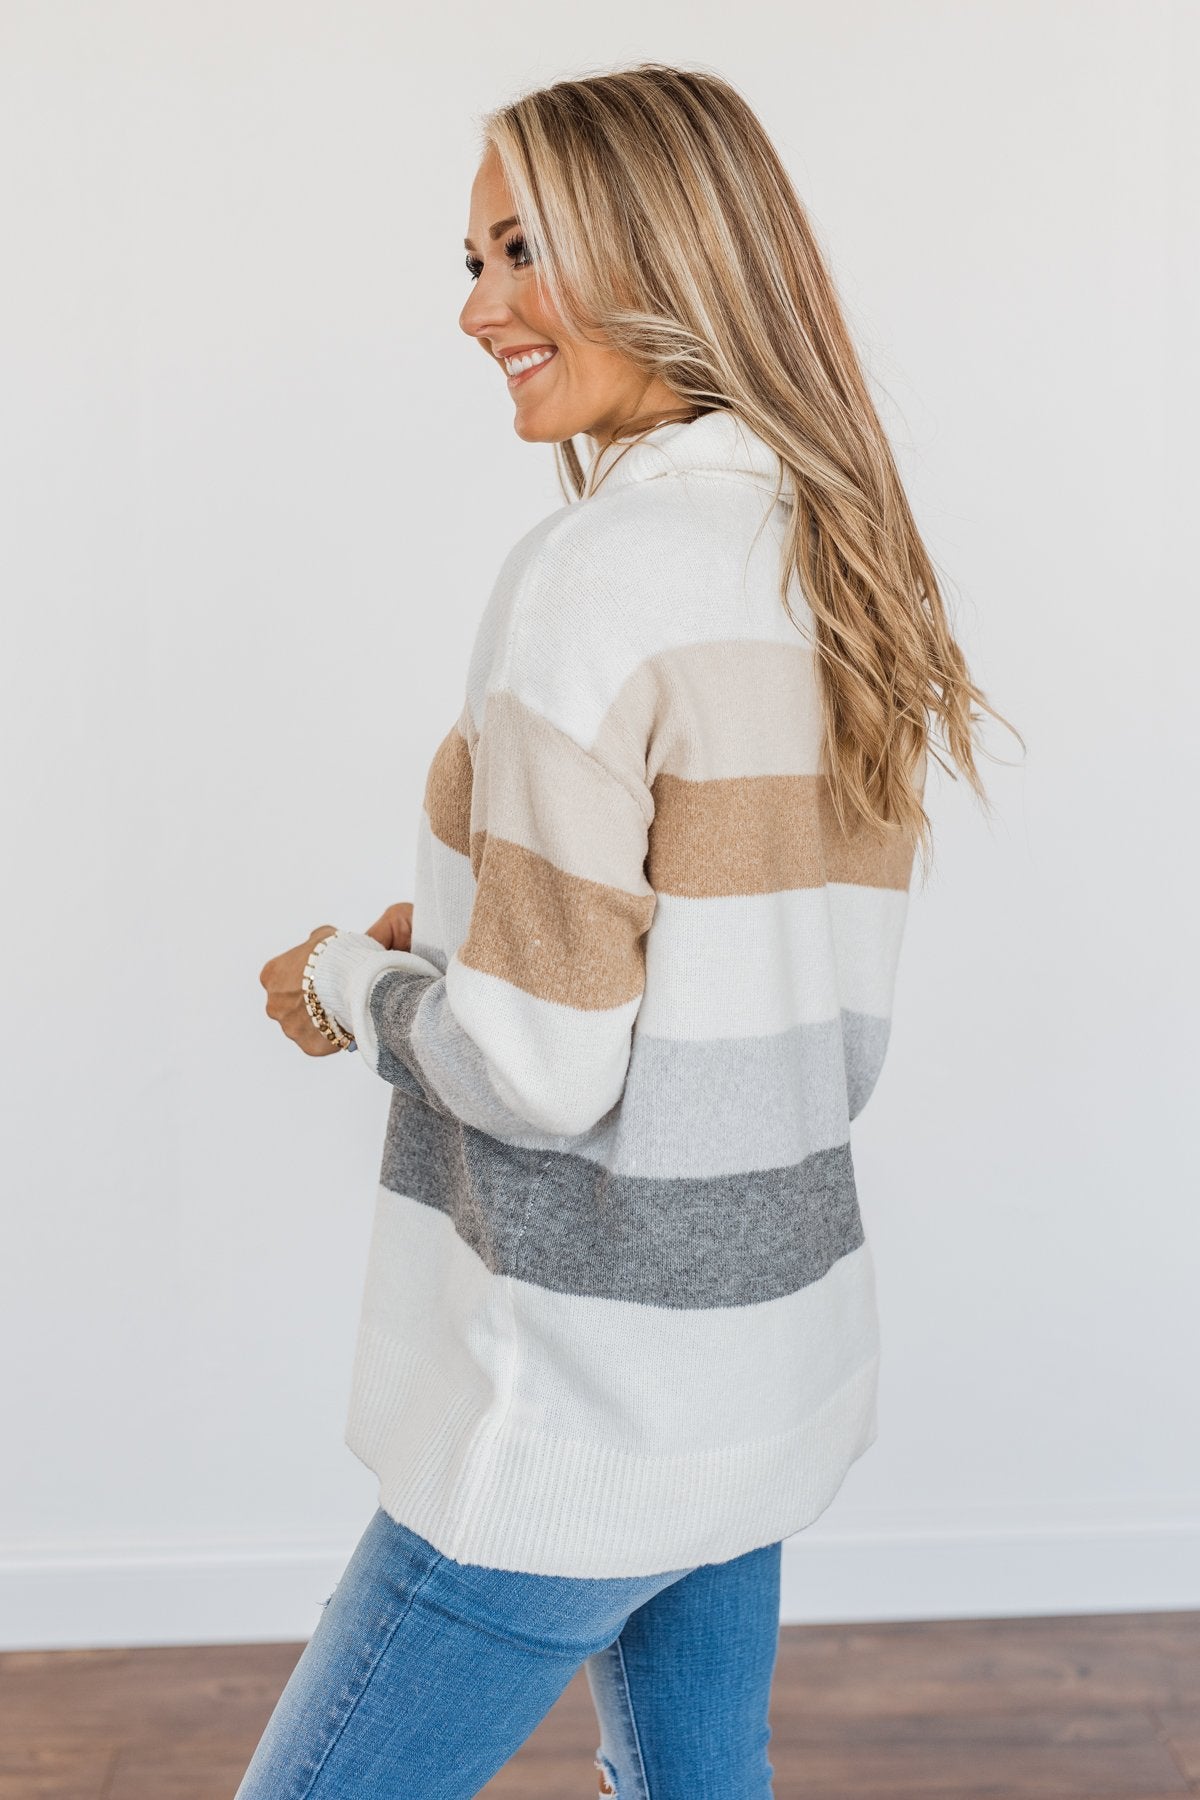 Sweet Autumn Air Turtleneck Sweater- Ivory, Camel & Grey